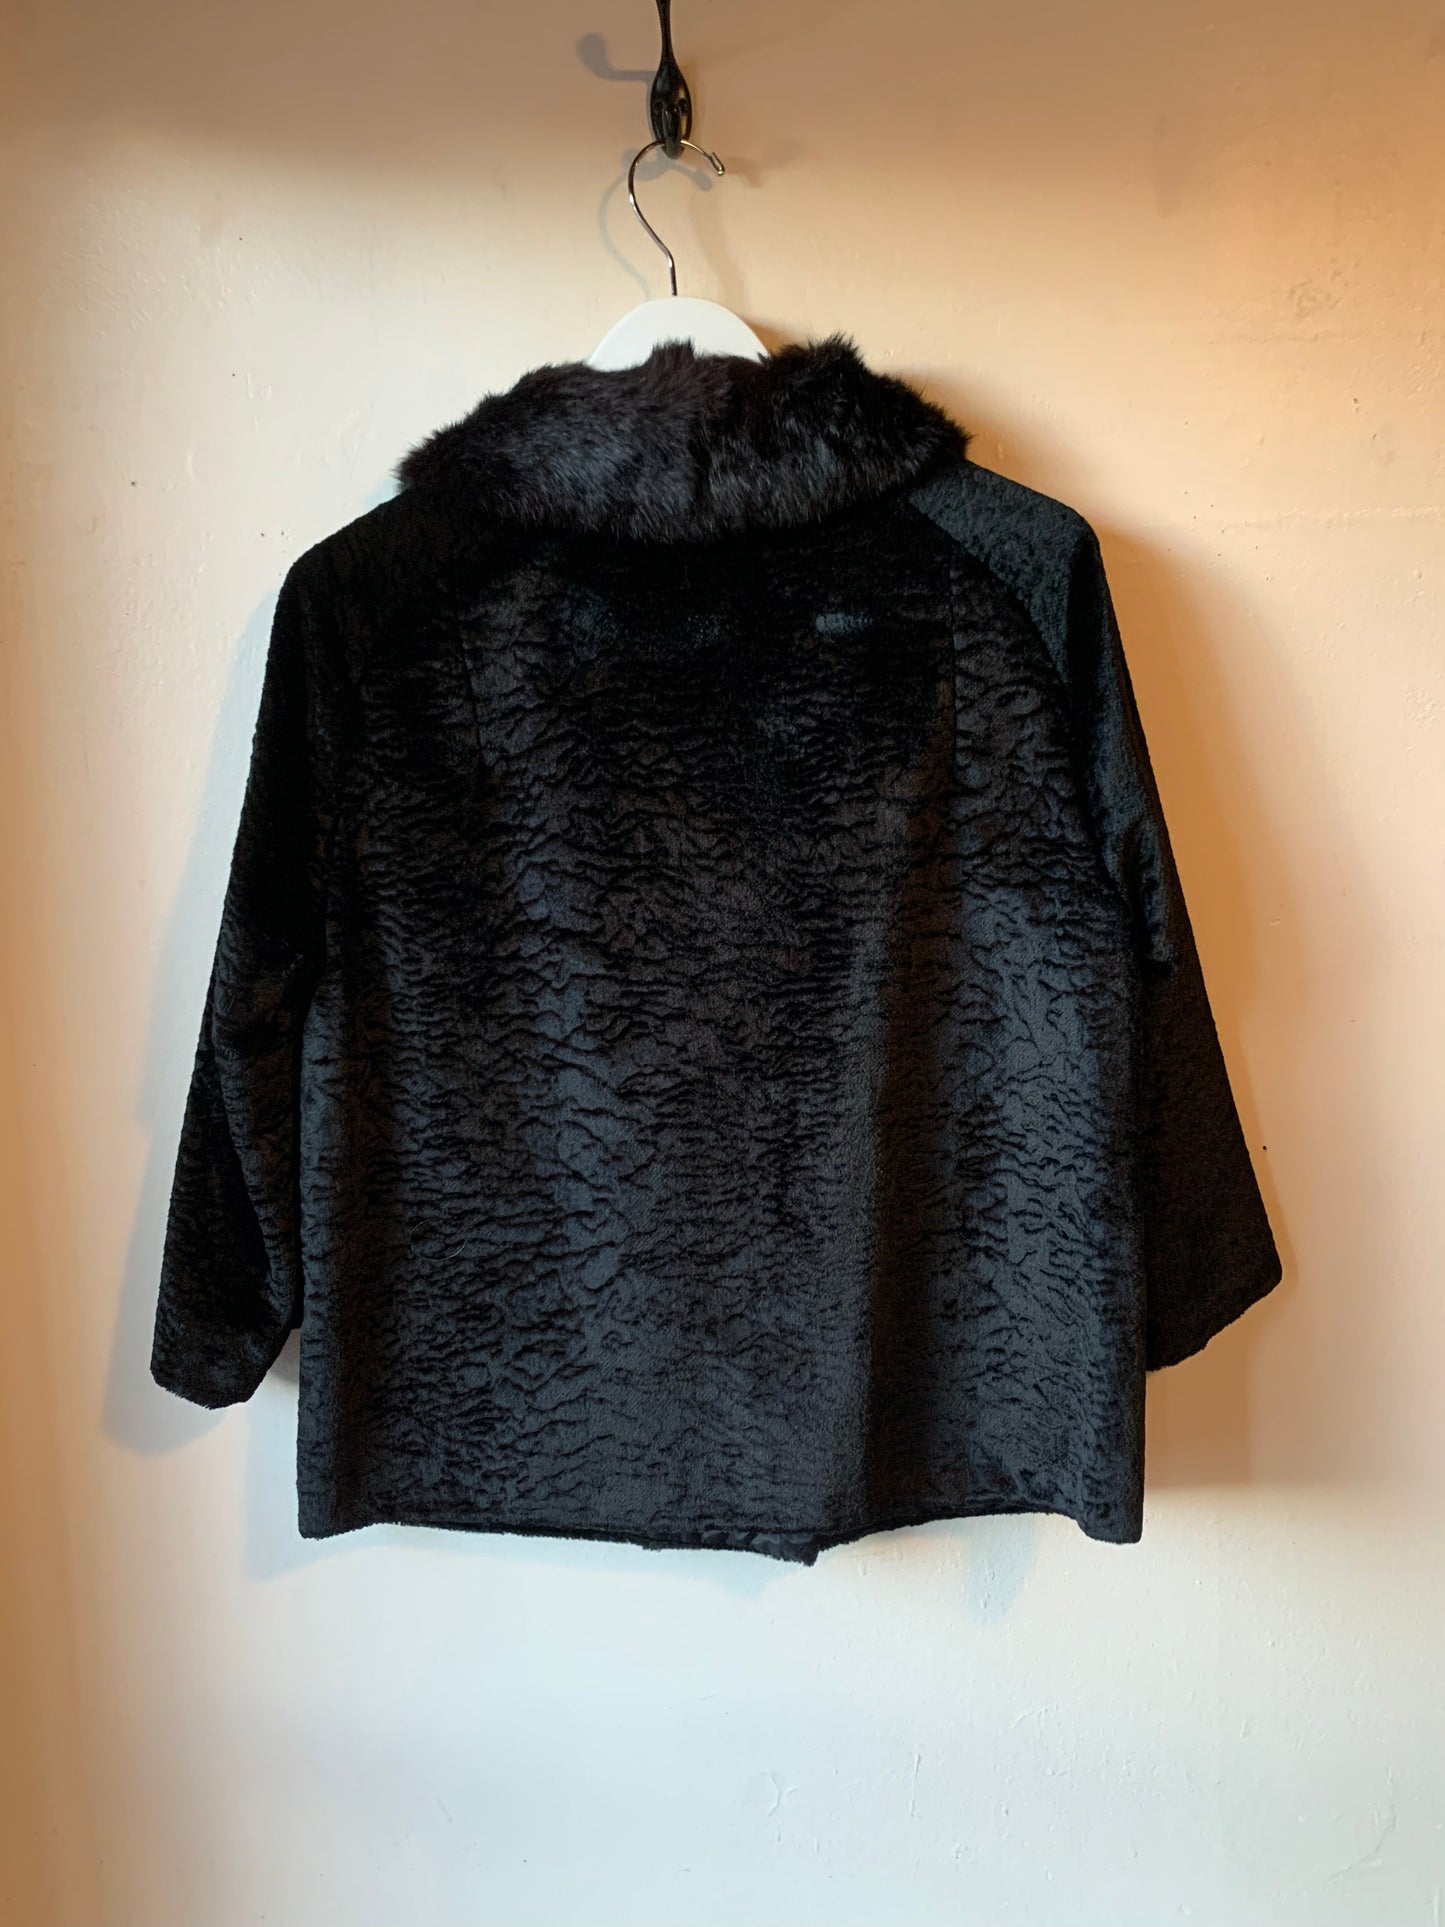 Vintage Sleek Black Rabbit Fur Collar Coat (M)